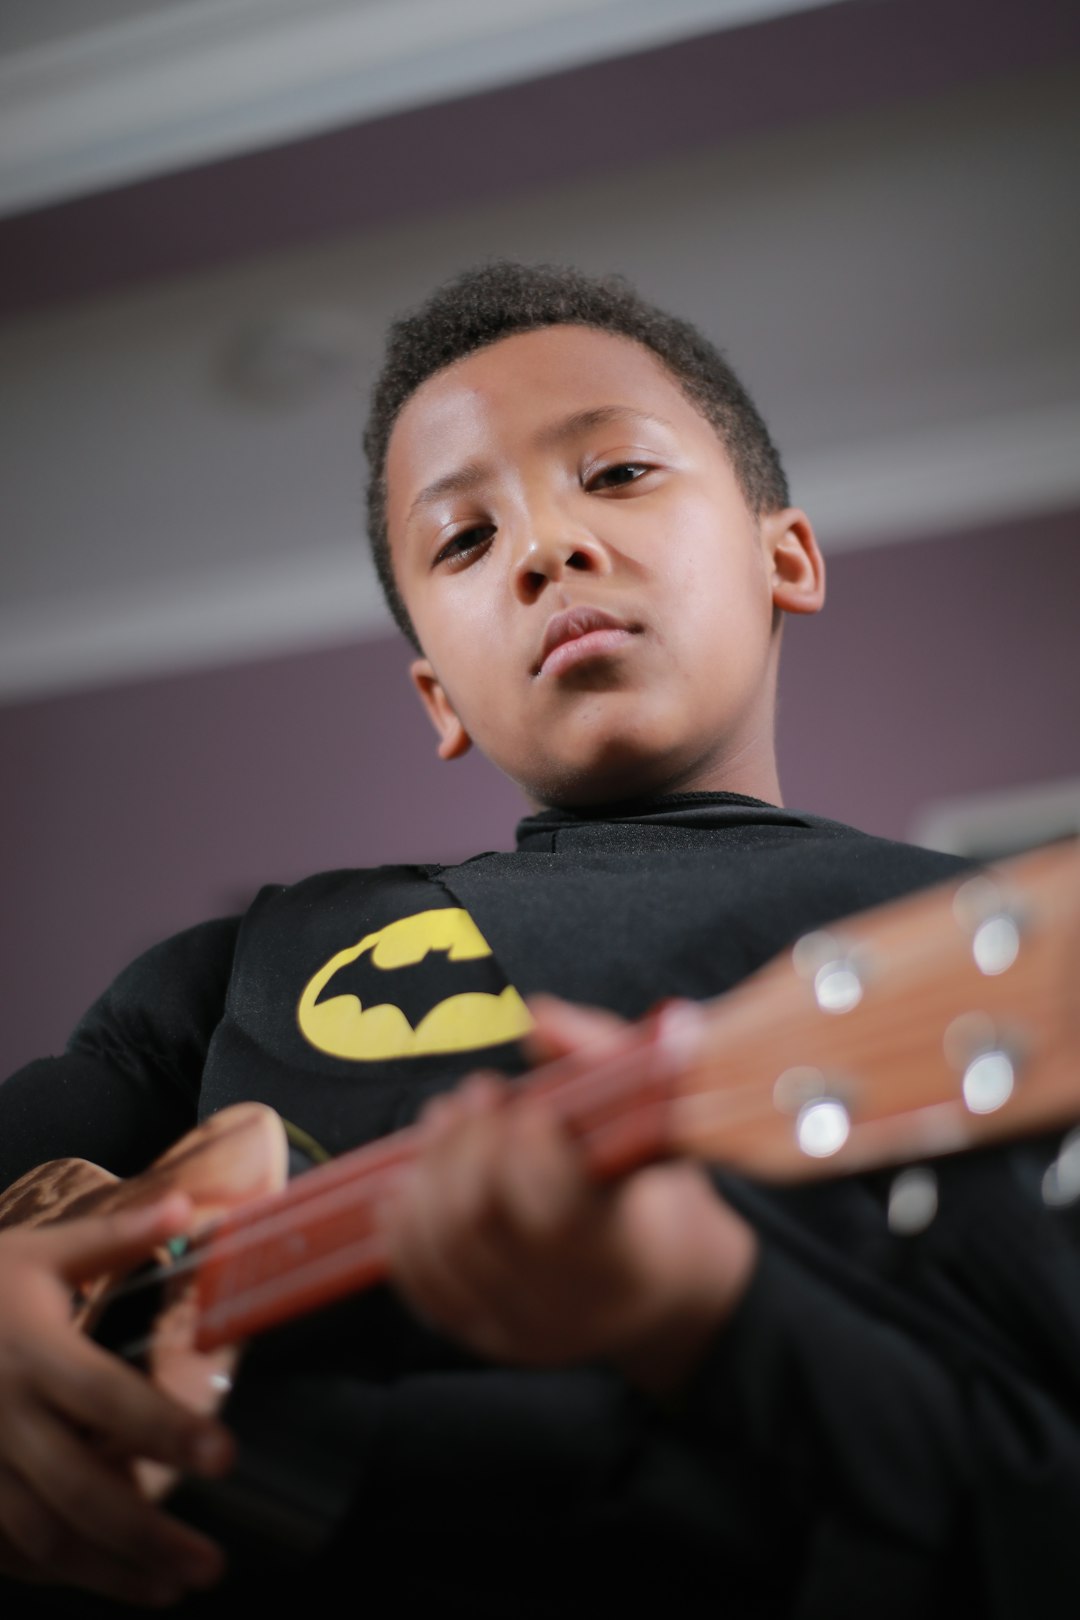 boy in black and yellow batman shirt playing guitar